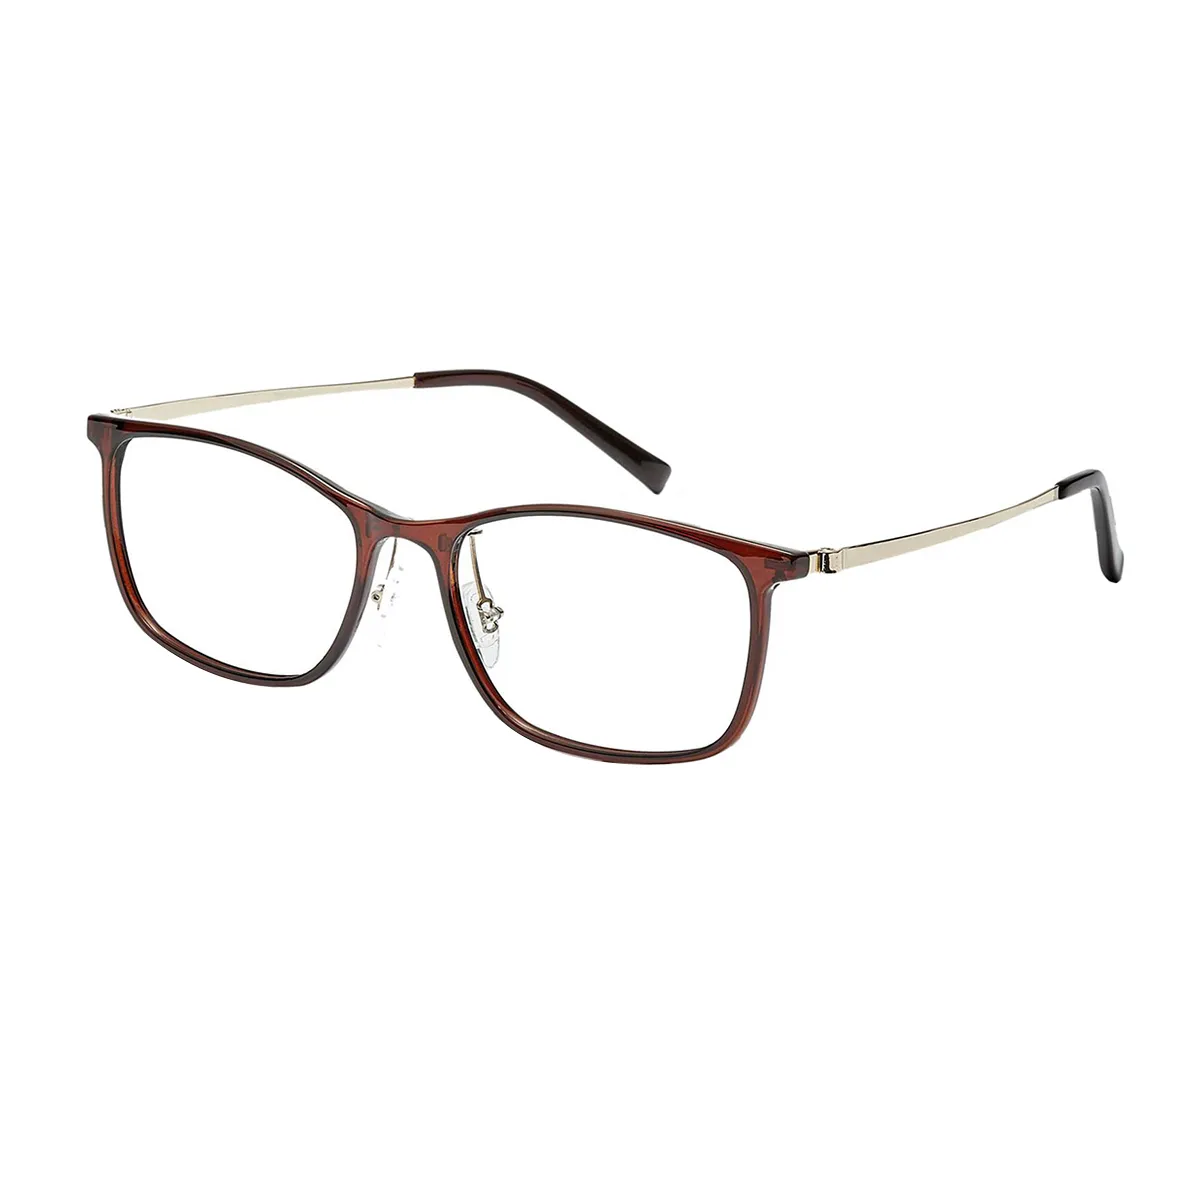 Foley - Rectangle Brown Glasses for Men & Women - EFE